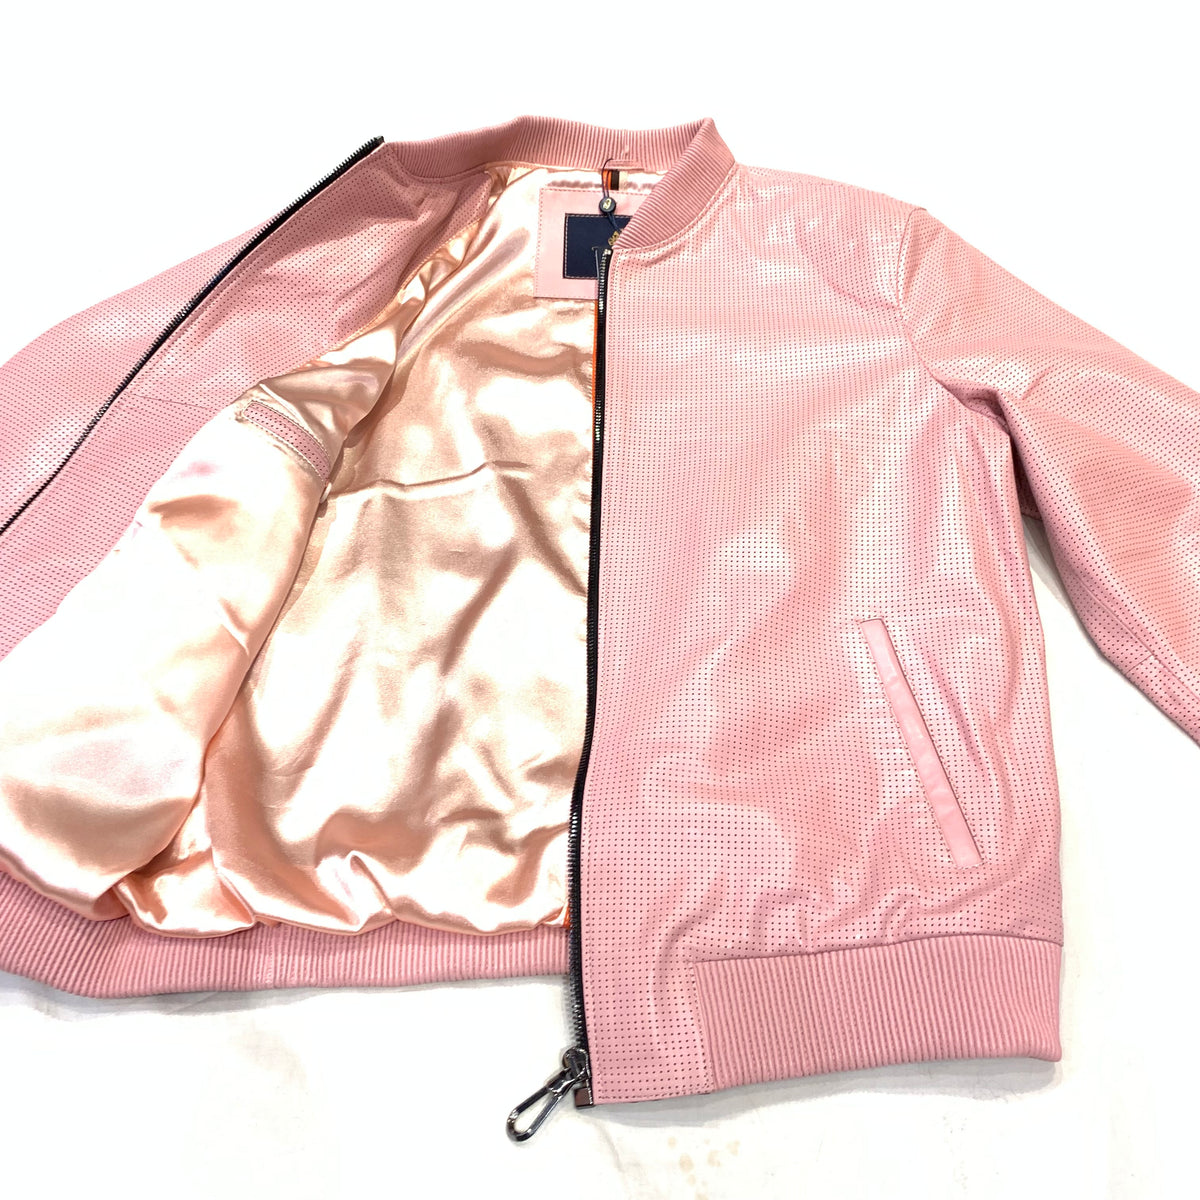 Kashani Baby Pink Perforated Lambskin Bomber Jacket - Dudes Boutique